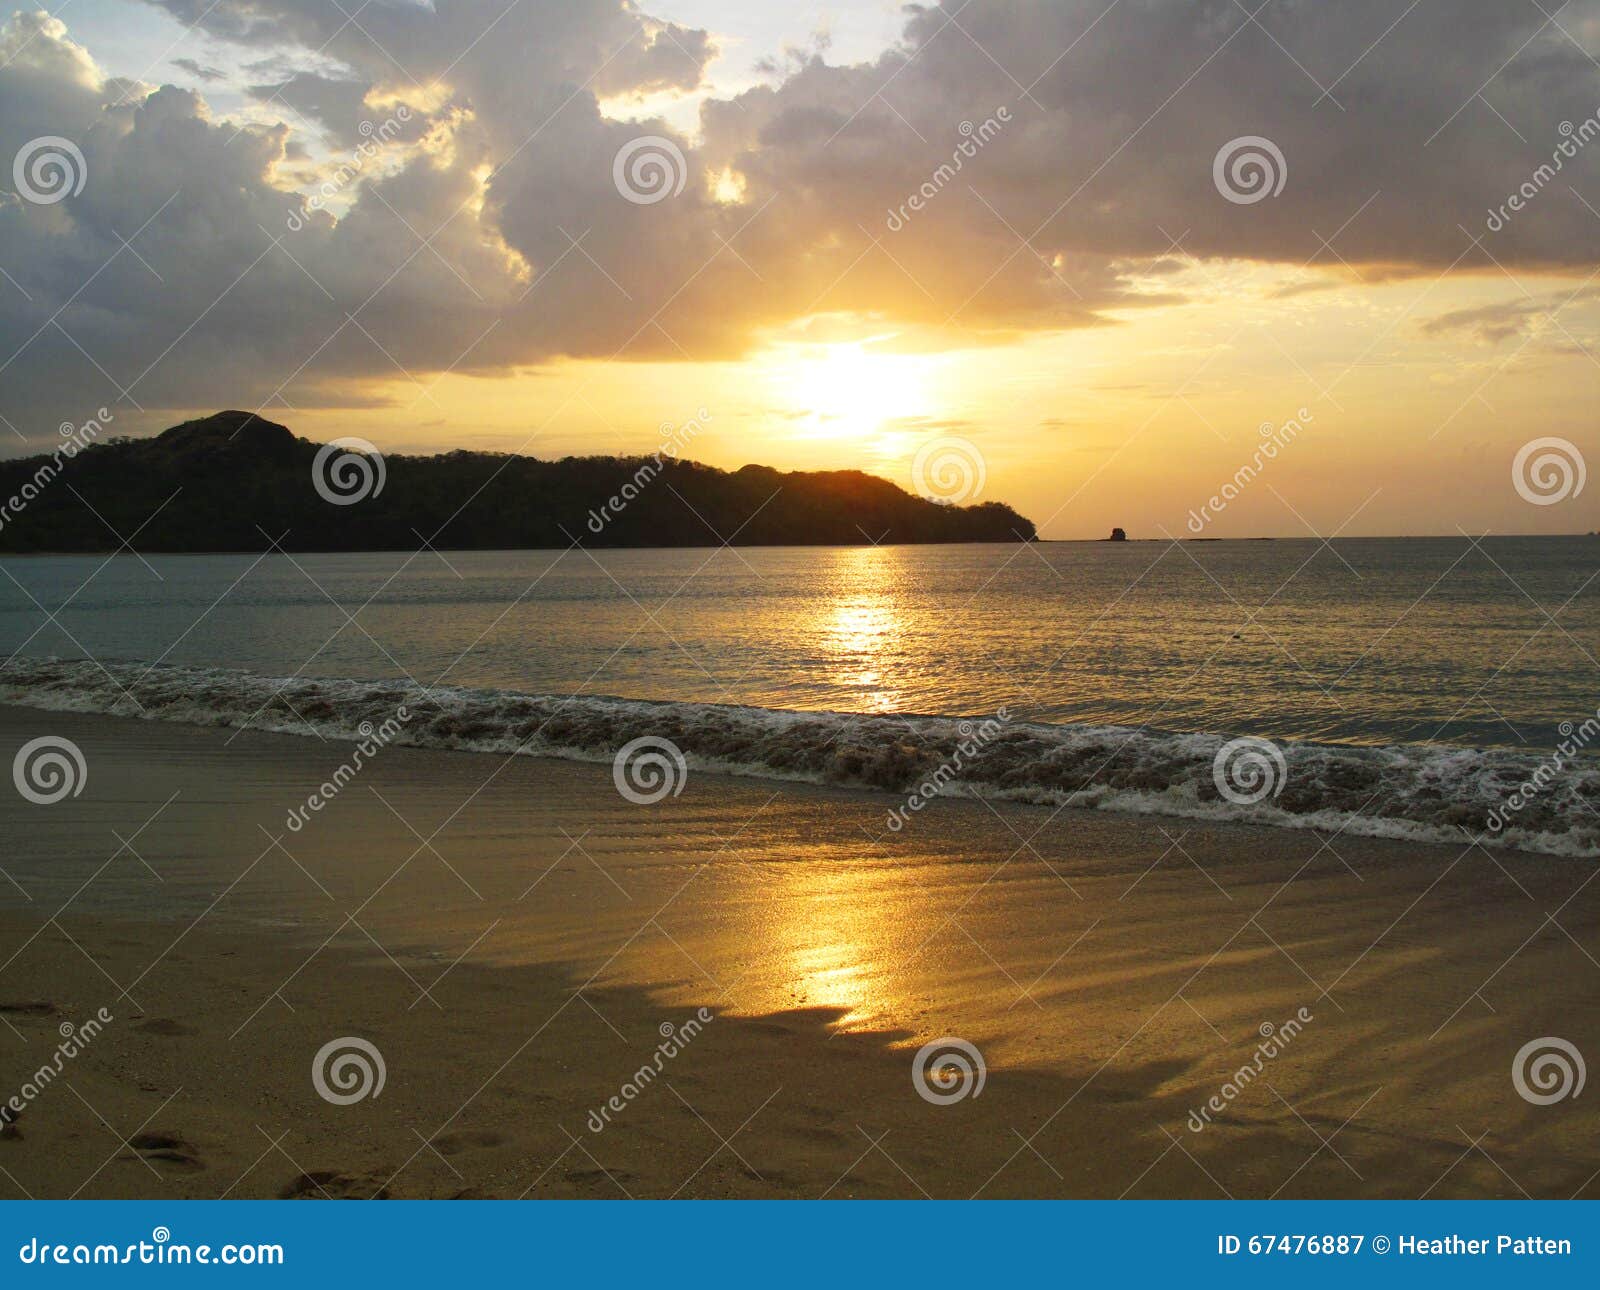 playa conchal beach at sunset